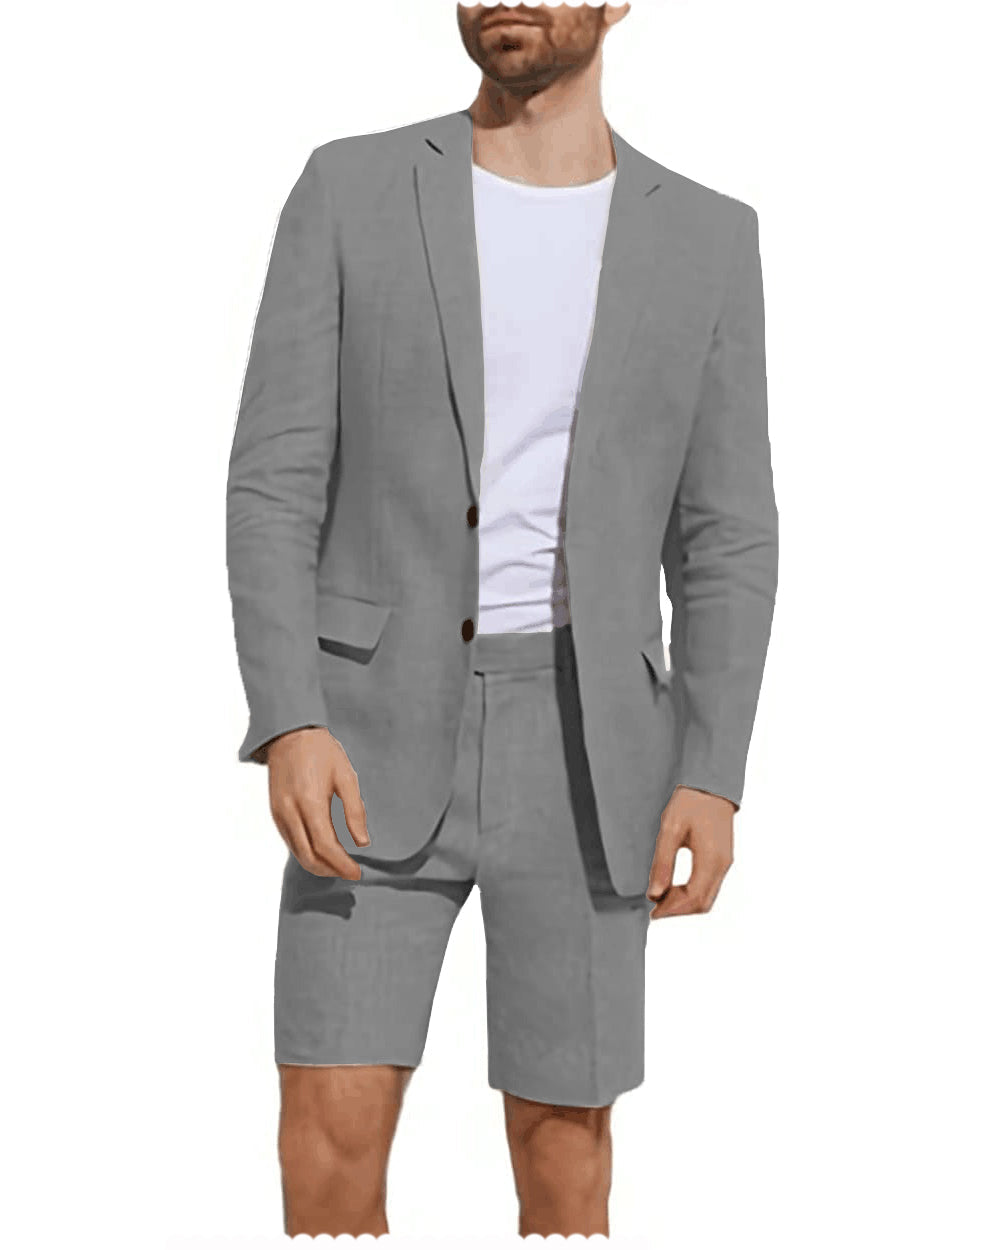 aesido 2 Pieces Casual Mens Suit (Blazer+Pants)